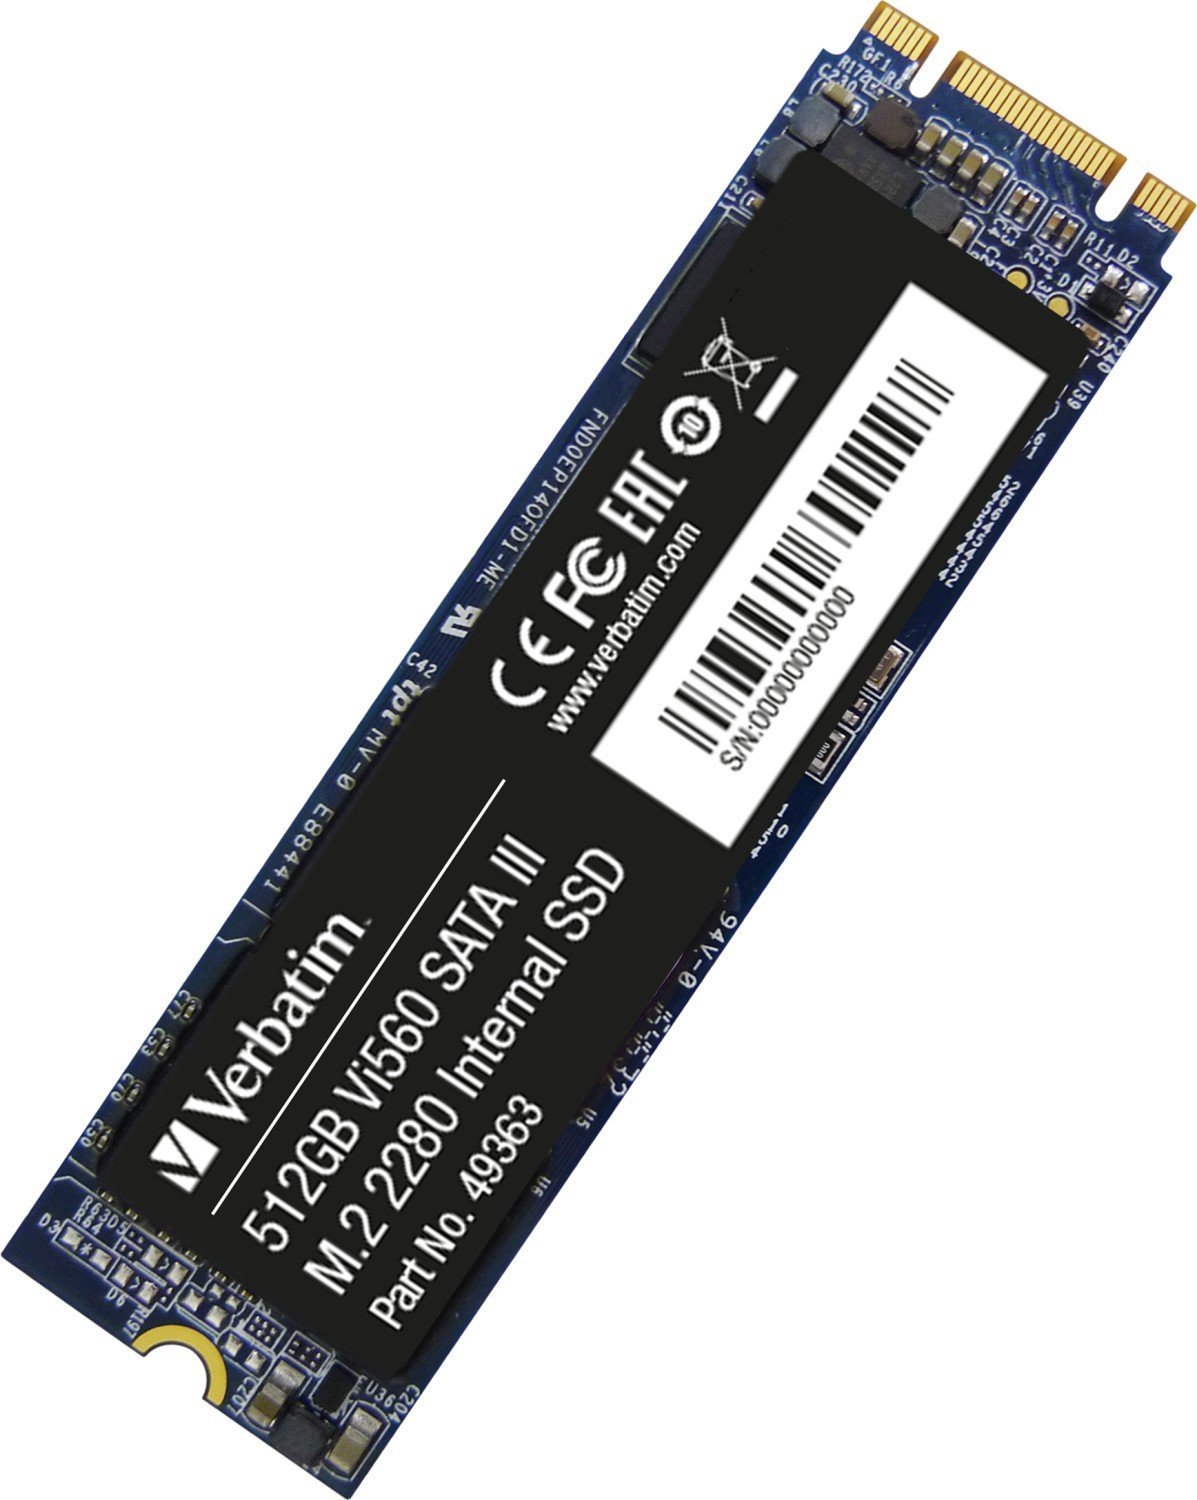 Solid State Drive SSD Verbatim Vi560, 512 GB, M.2 22110, SATA III